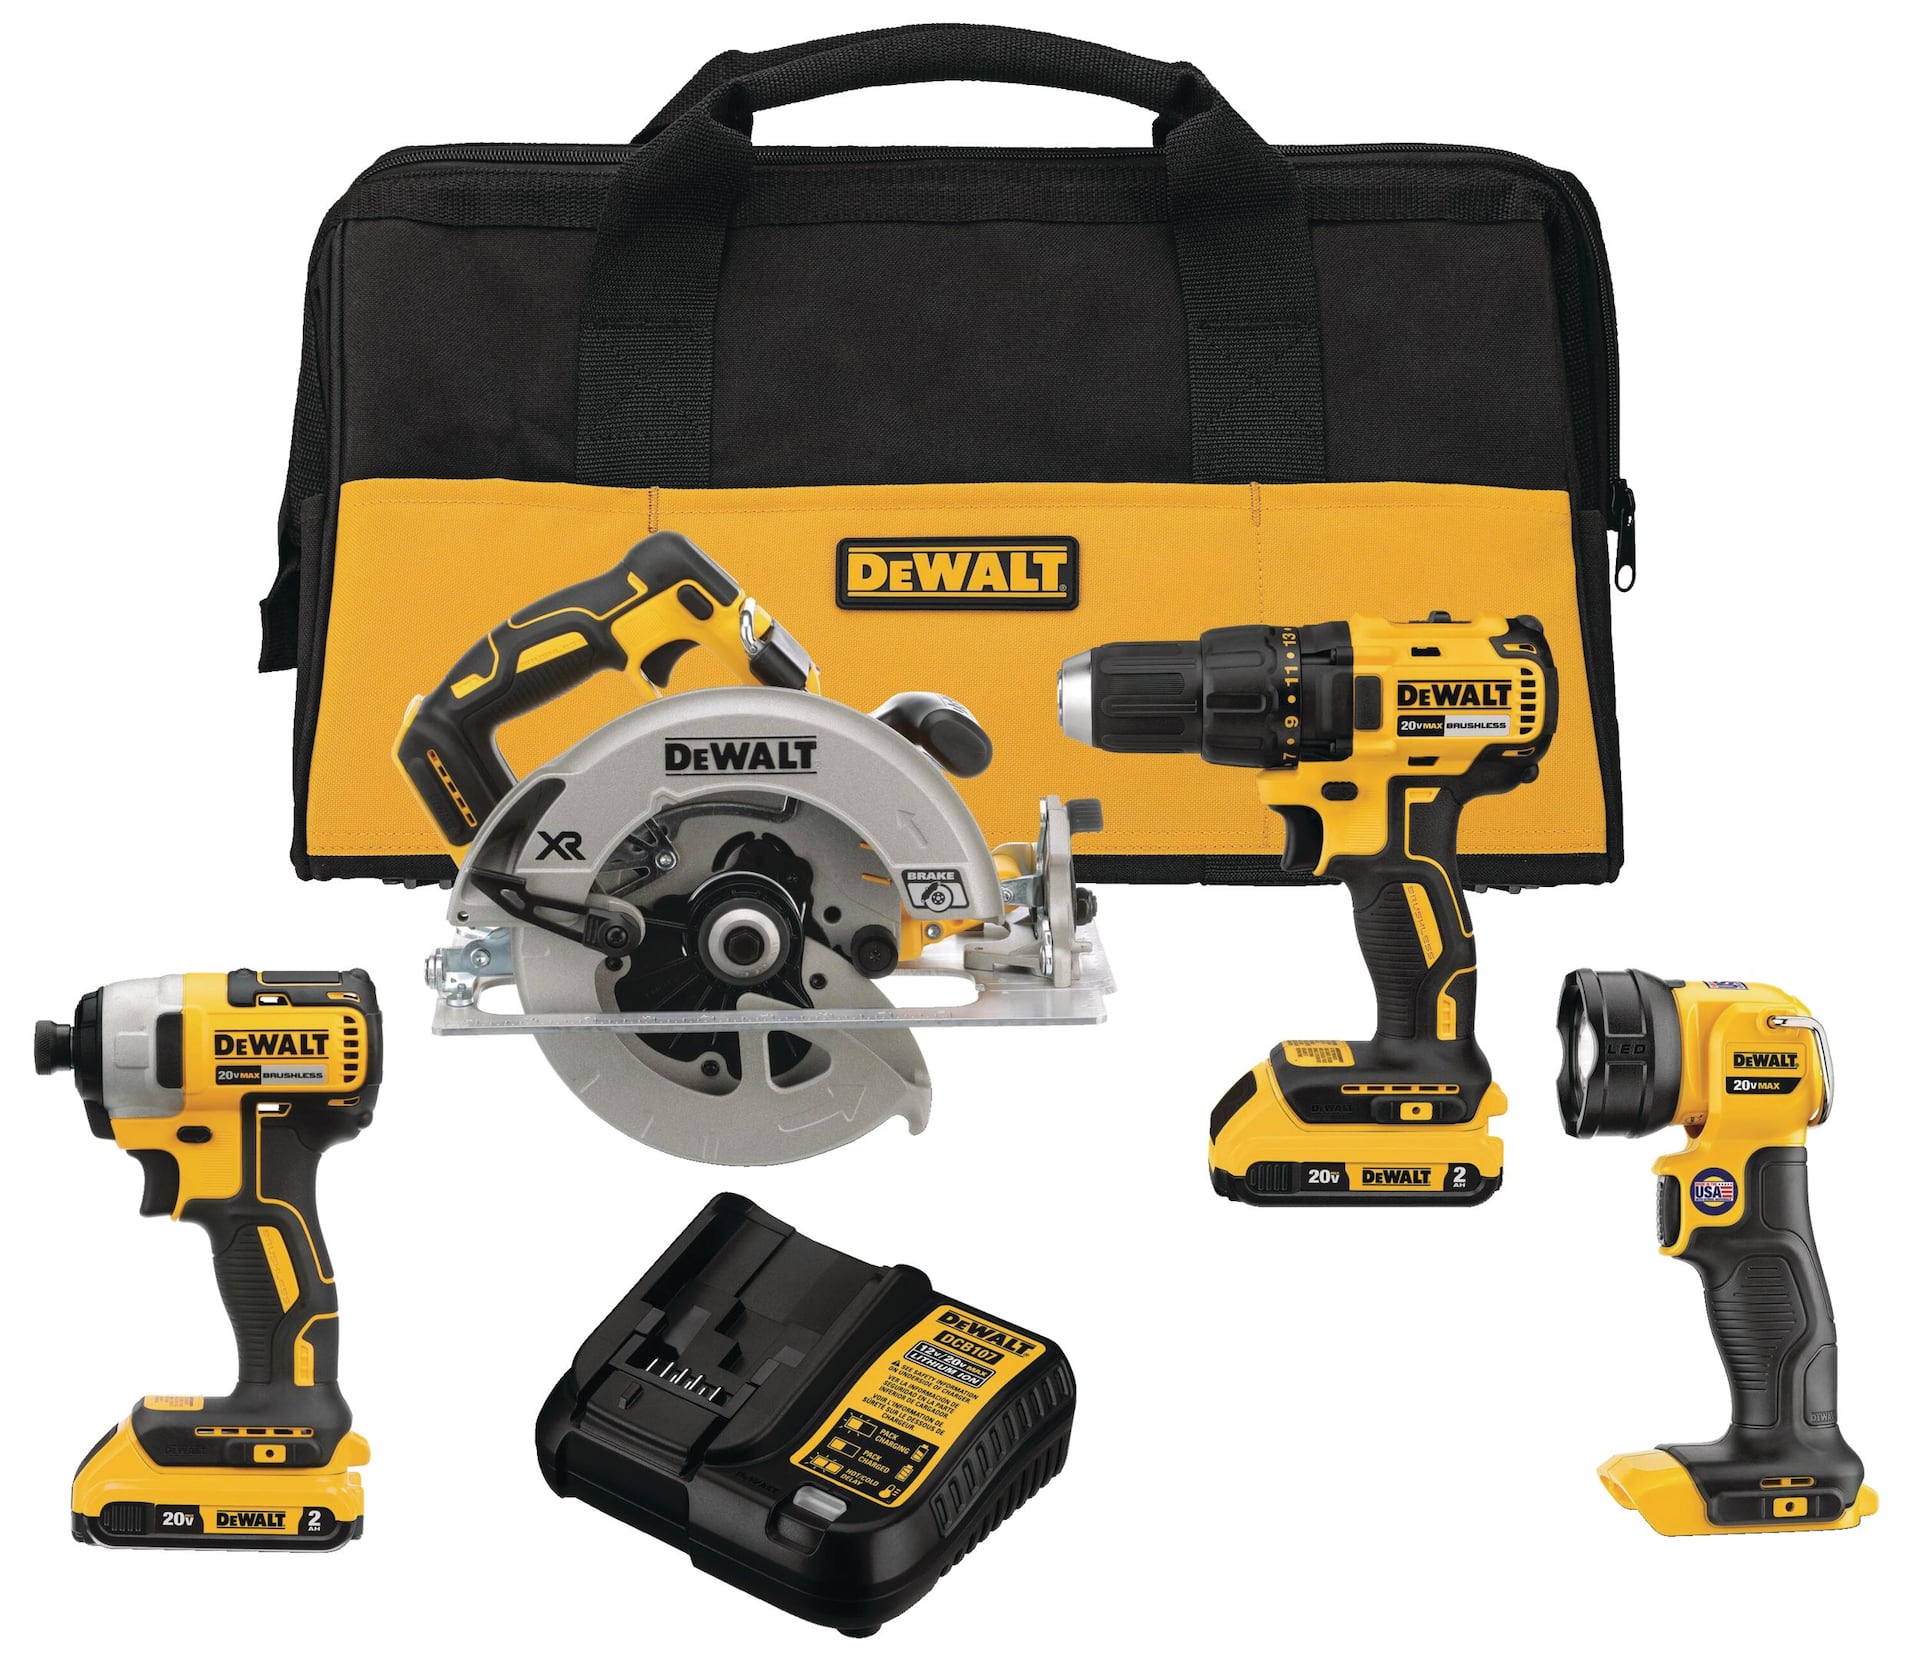 DEWALT DCK477D2 20V MAX Cordless Drill/Driver, Impact Driver, Circular Saw  & Work Light Combo Kit